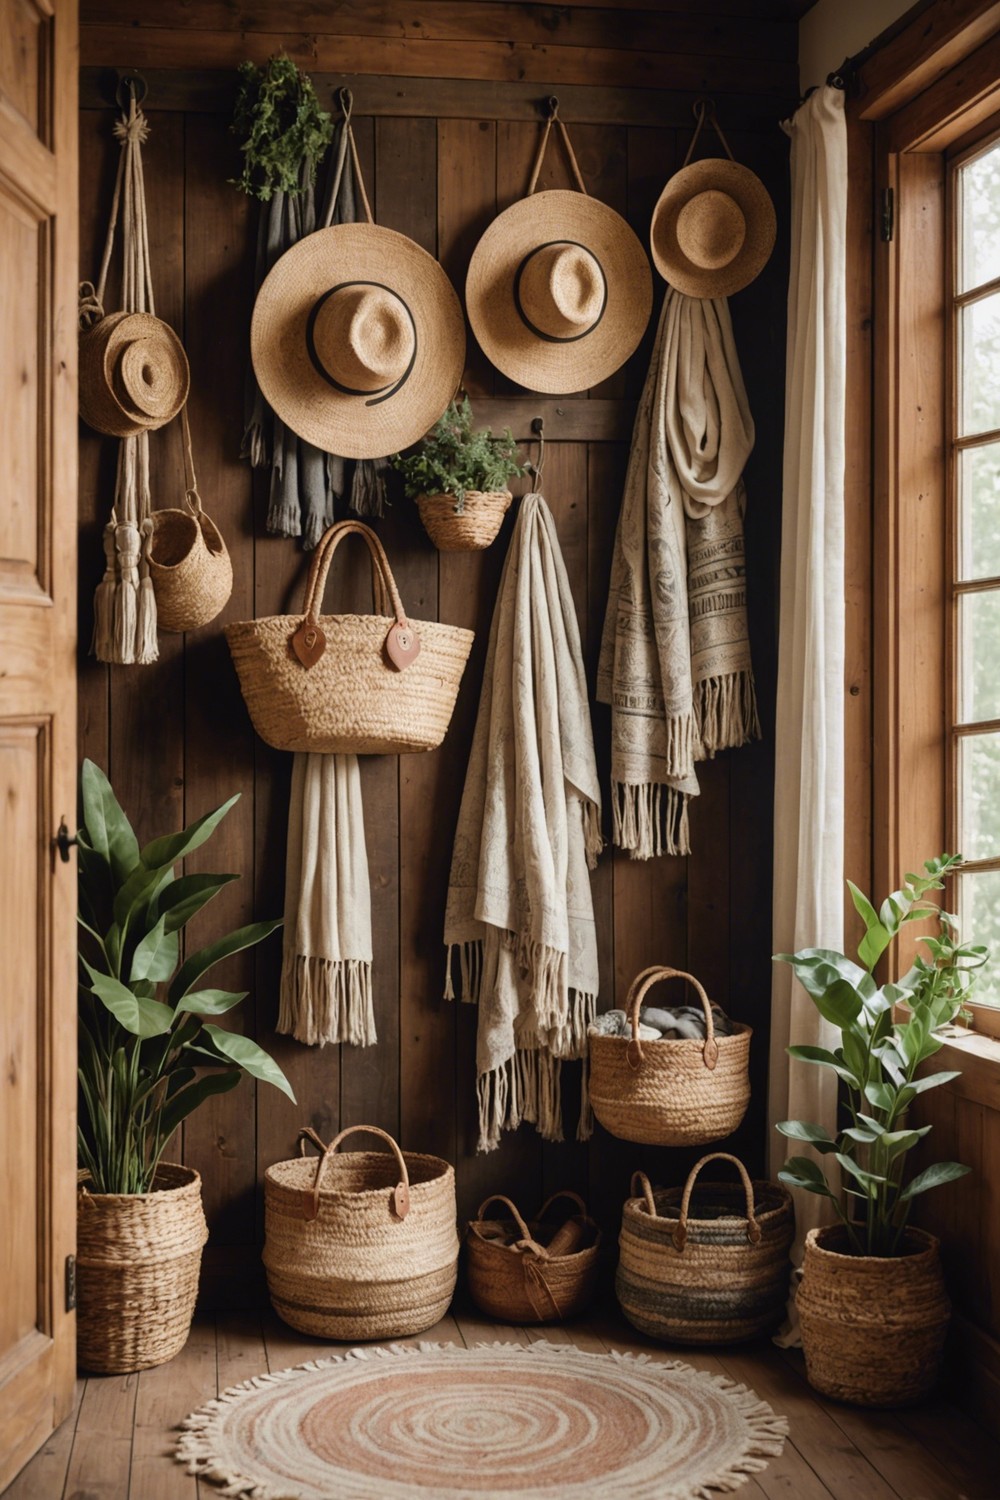 Woven Fabric Baskets as Closet Organizers